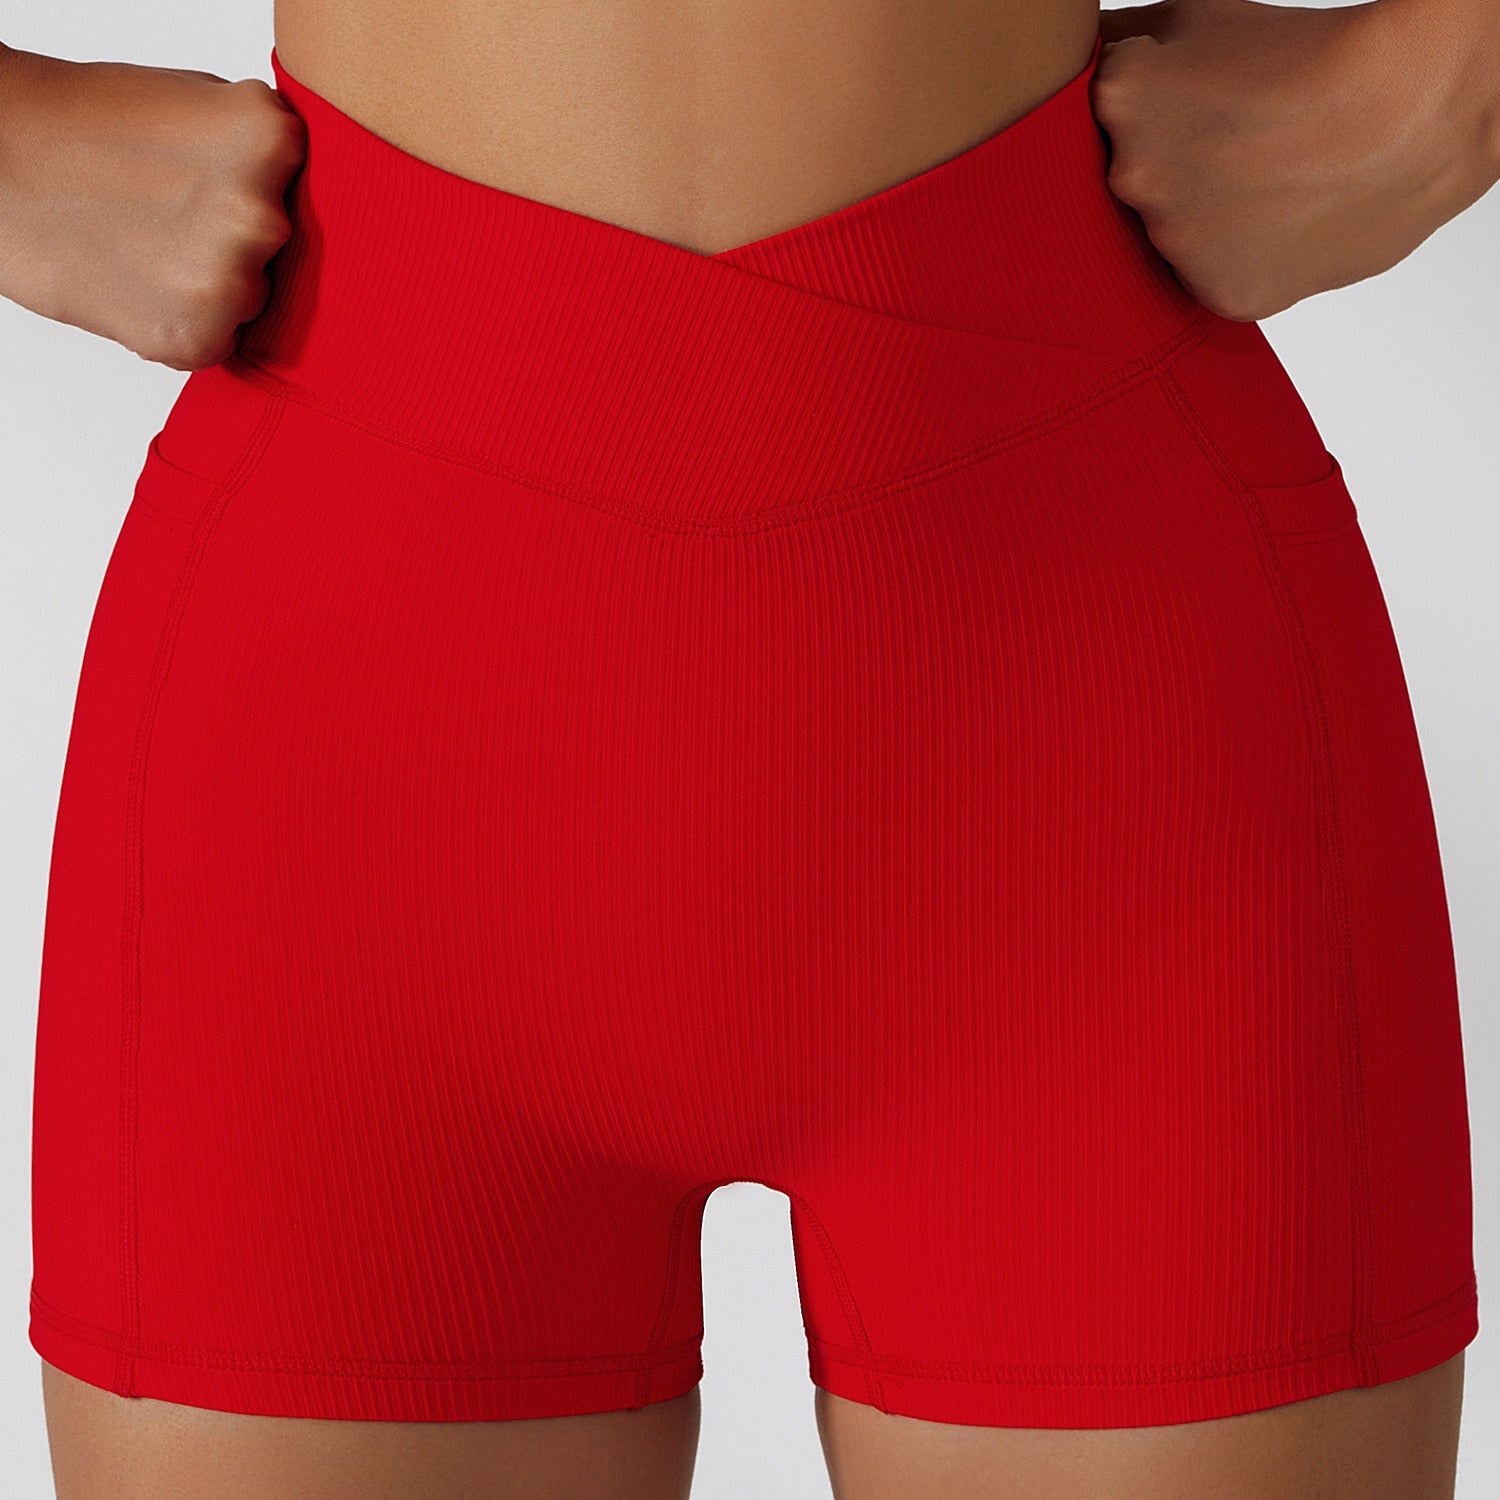 Women Gym Crop Top Bra Shorts shorts 1pcs 3